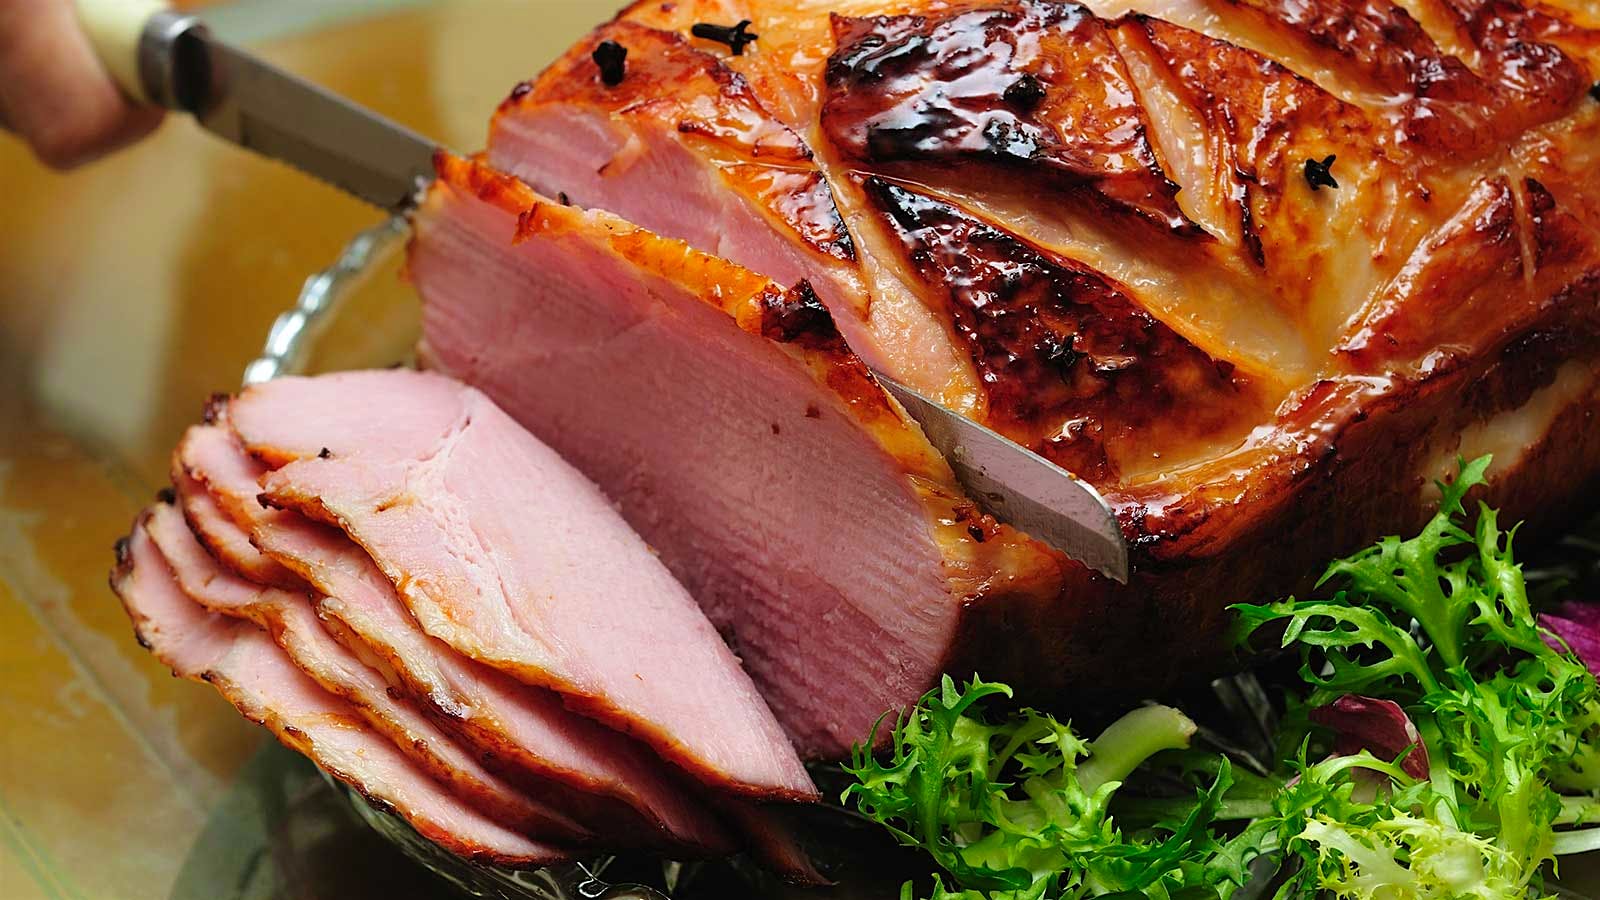 Thanksgiving-Ready Glazed Ham from Gotham Bar & Grill’s Victoria Blamey